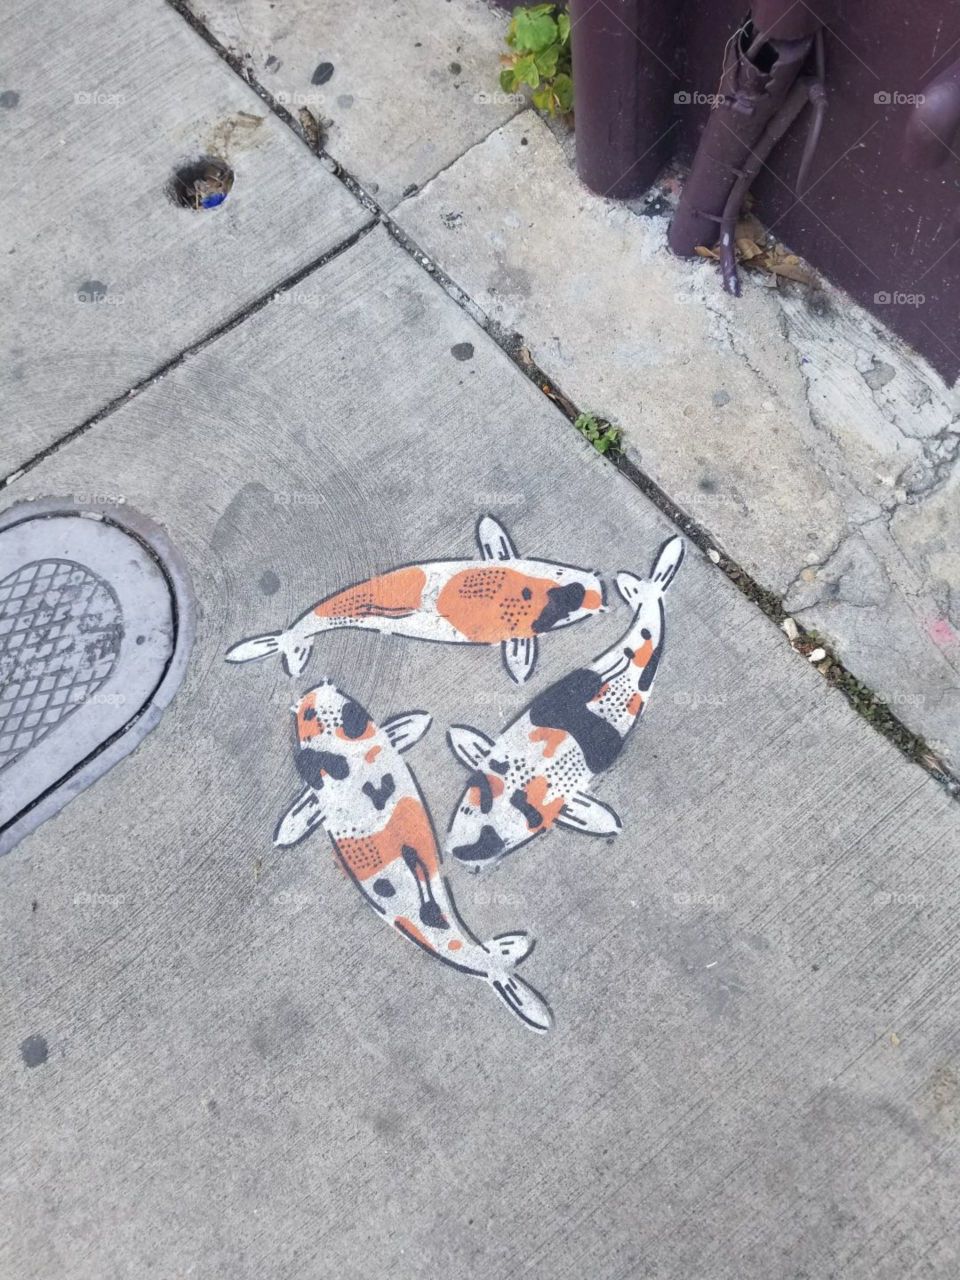 Street art design of fish